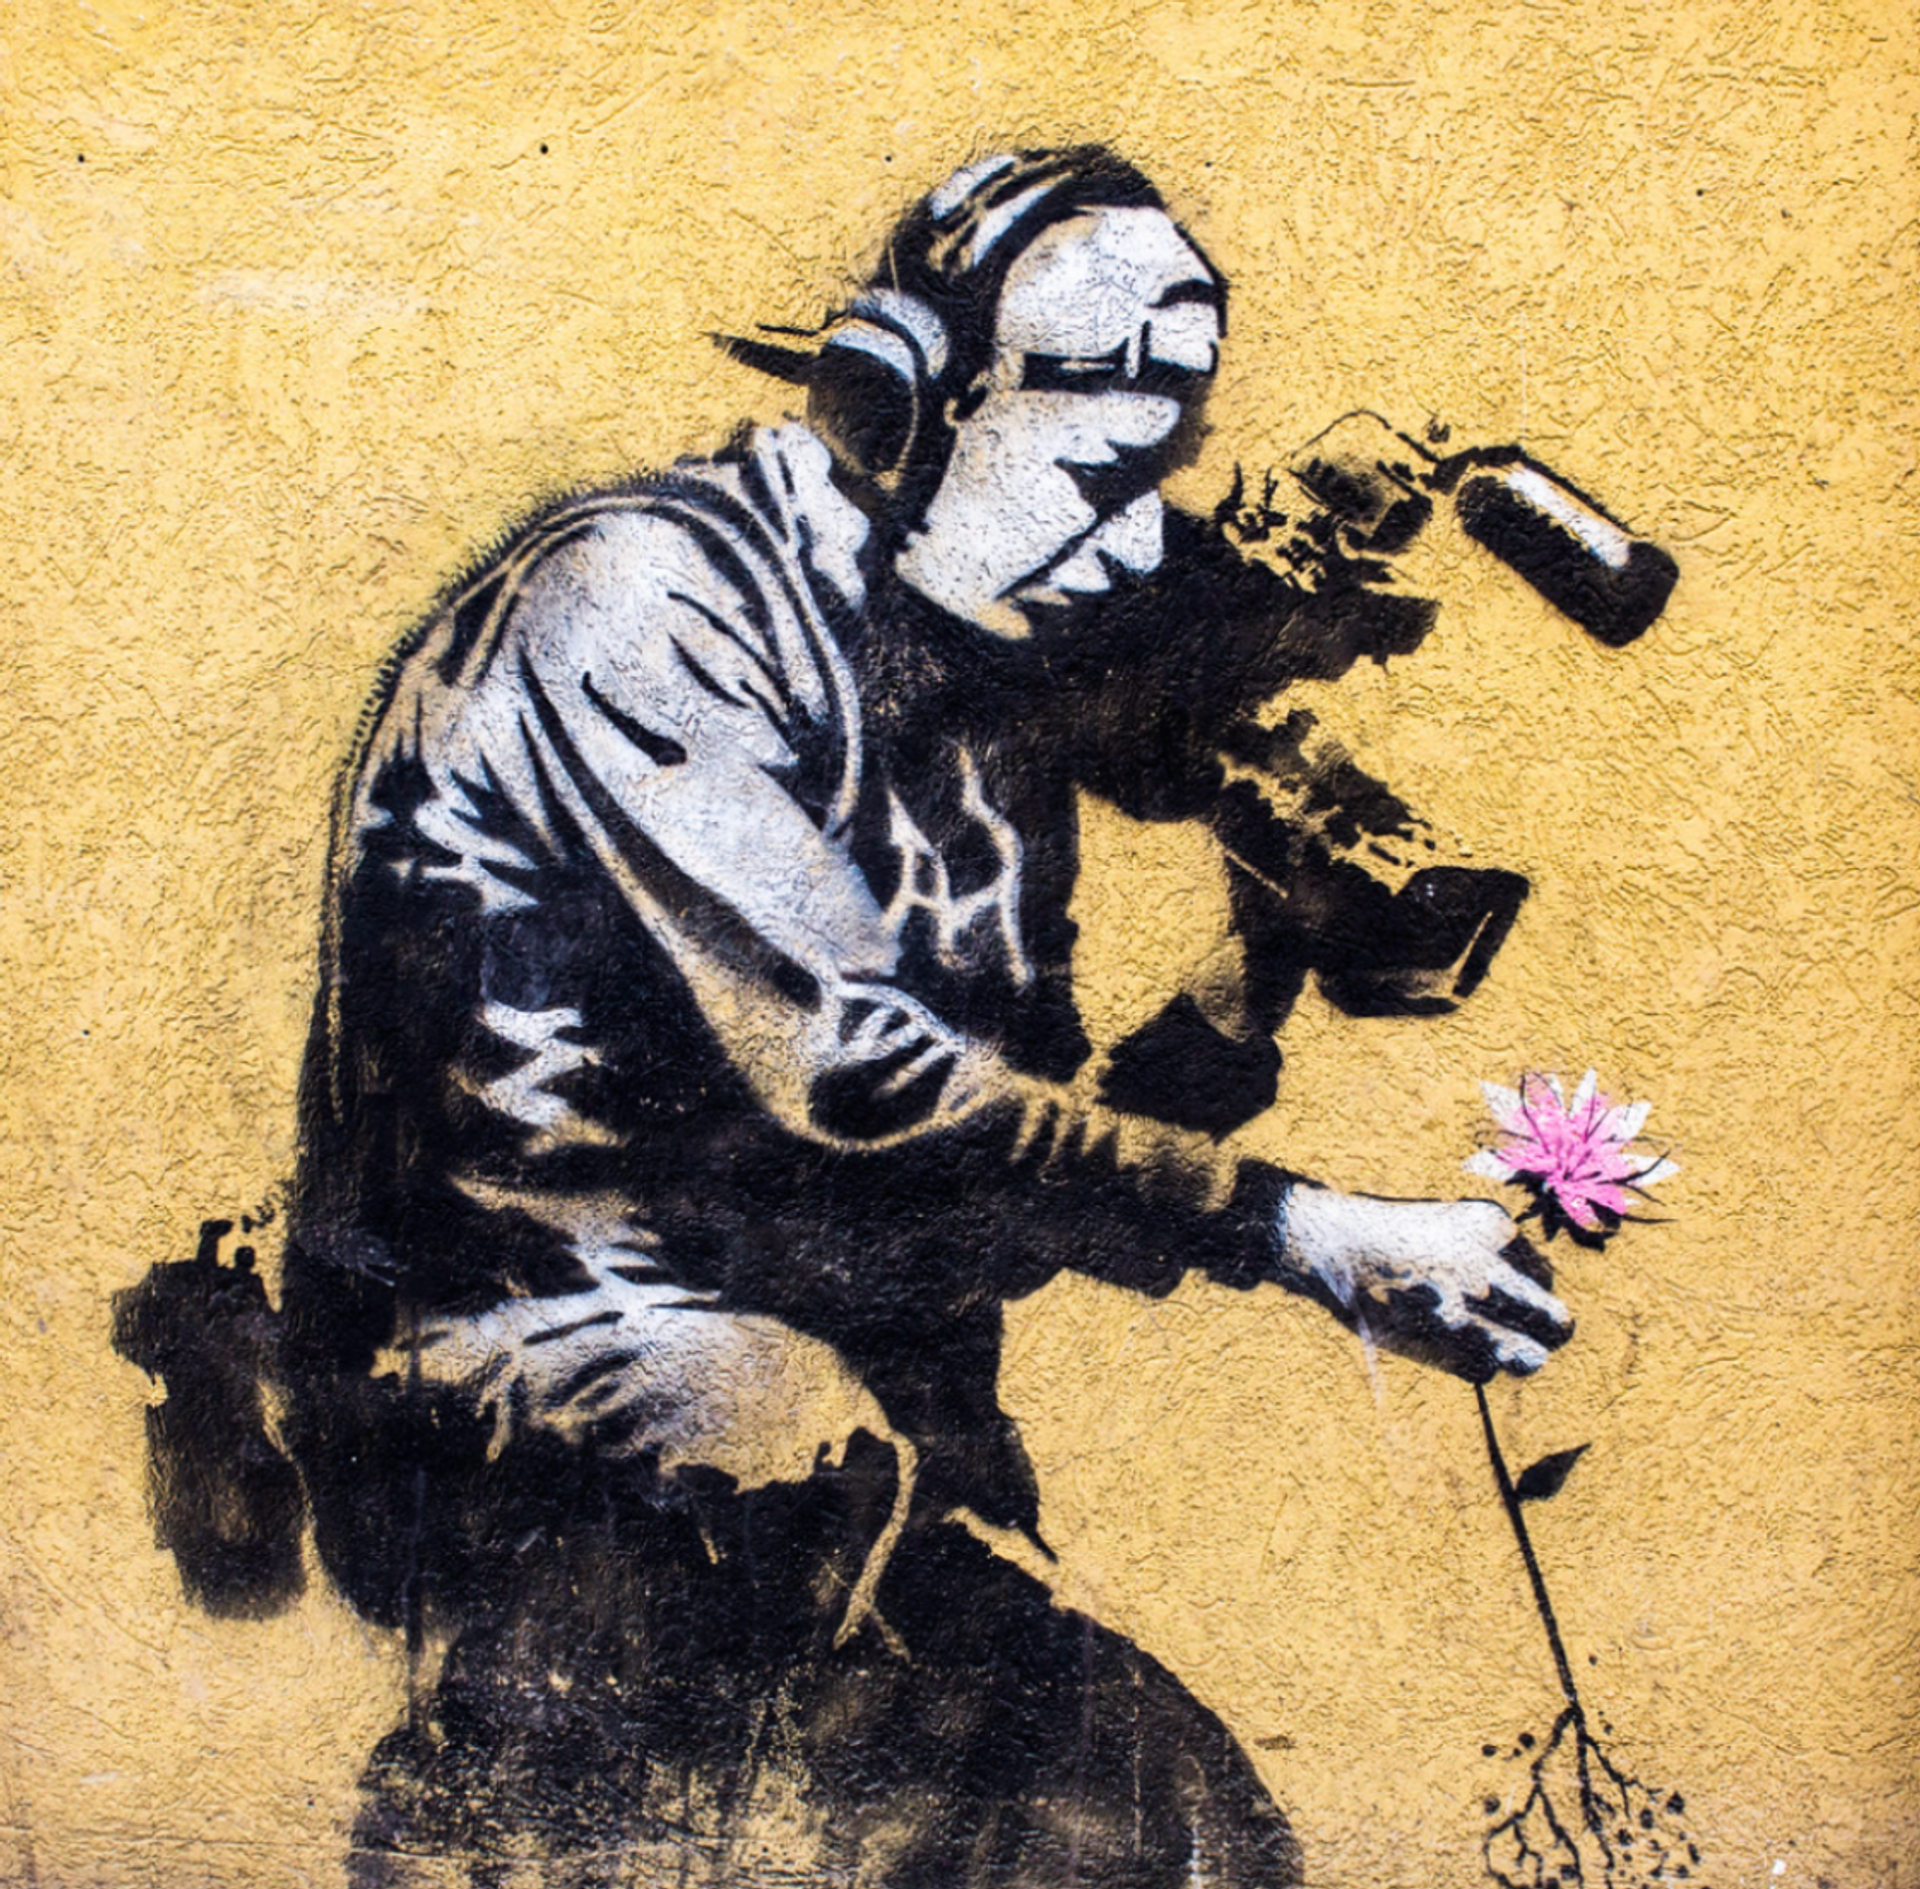 Camera Man and Flower by Banksy - MyArtBroker